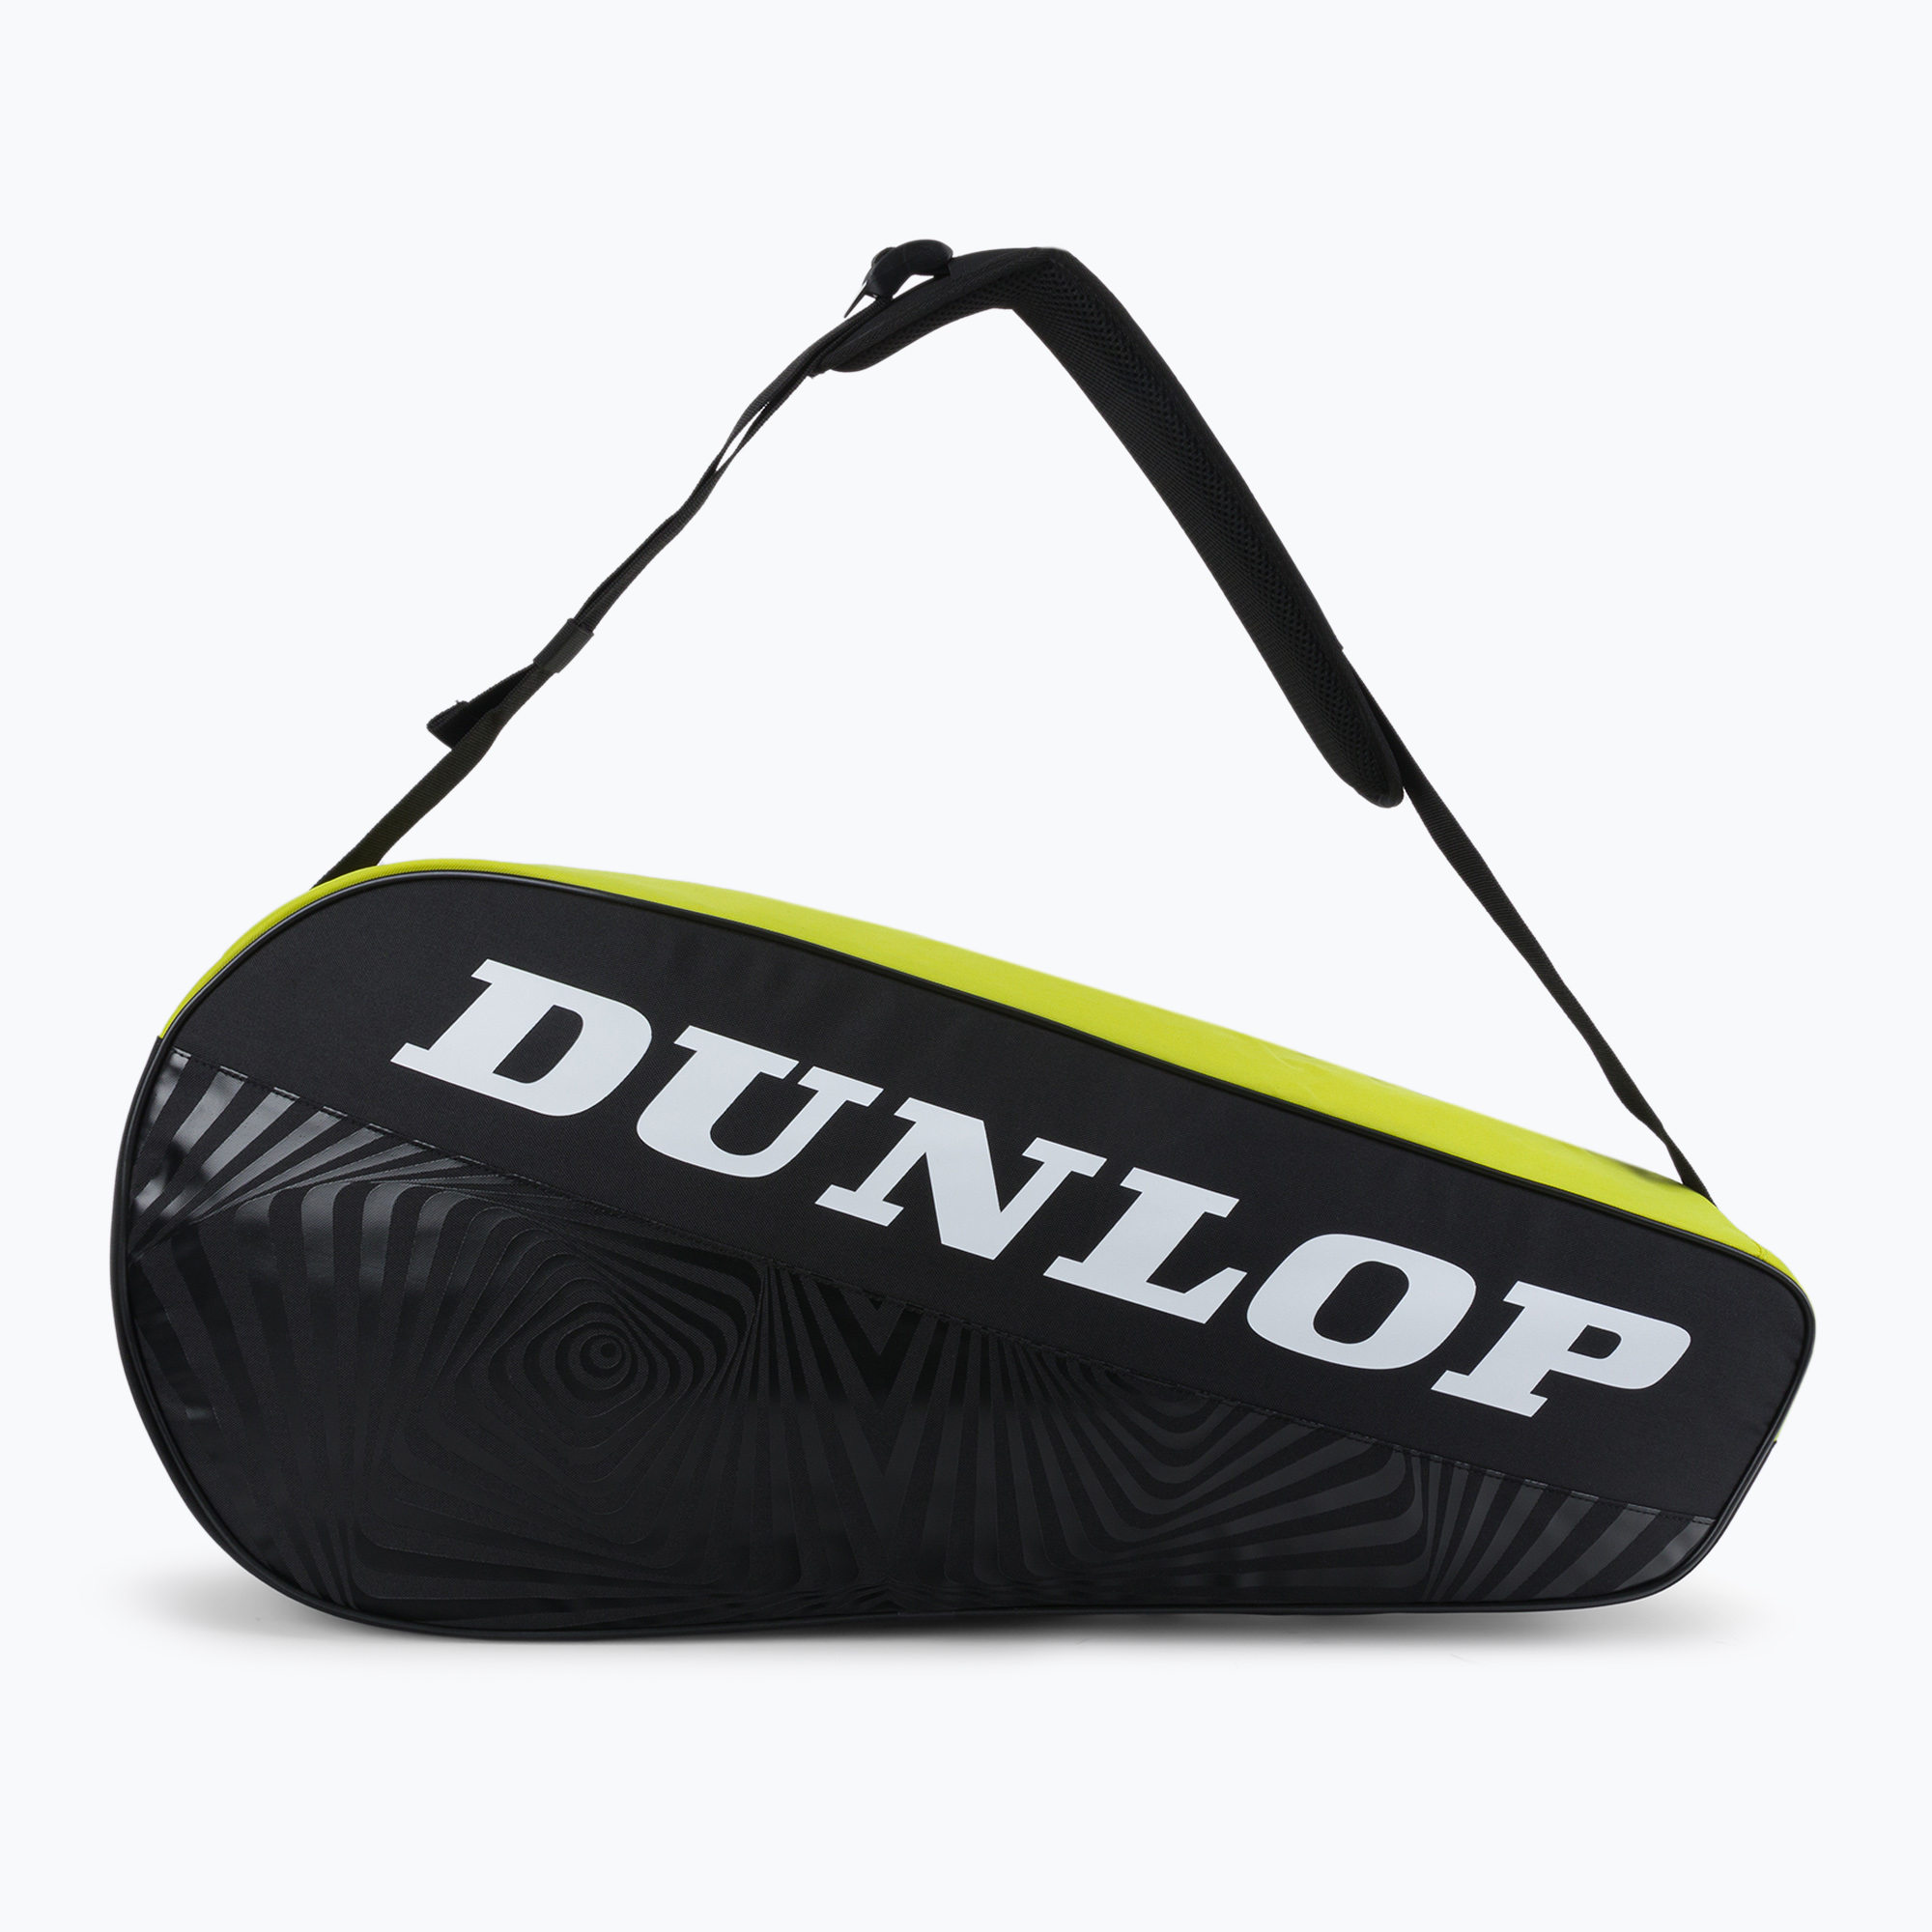 Geantă de tenis Dunlop D Tac Sx-Club 3Rkt negru-galbenă 10325363